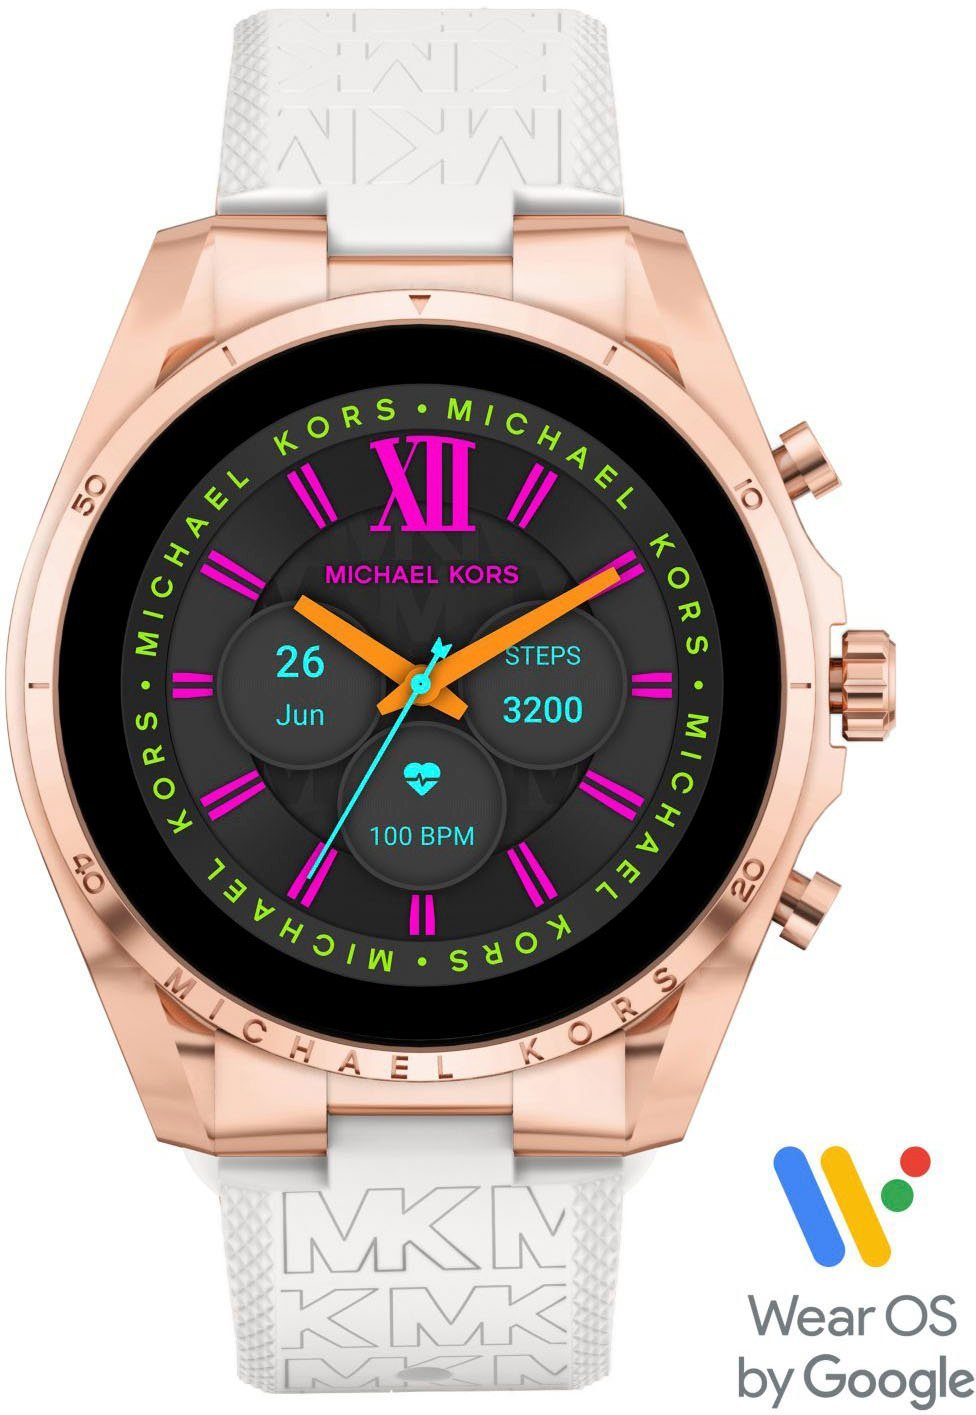 MICHAEL KORS by Google) MKT5153 OS ACCESS GEN (Wear BRADSHAW, 6 Smartwatch